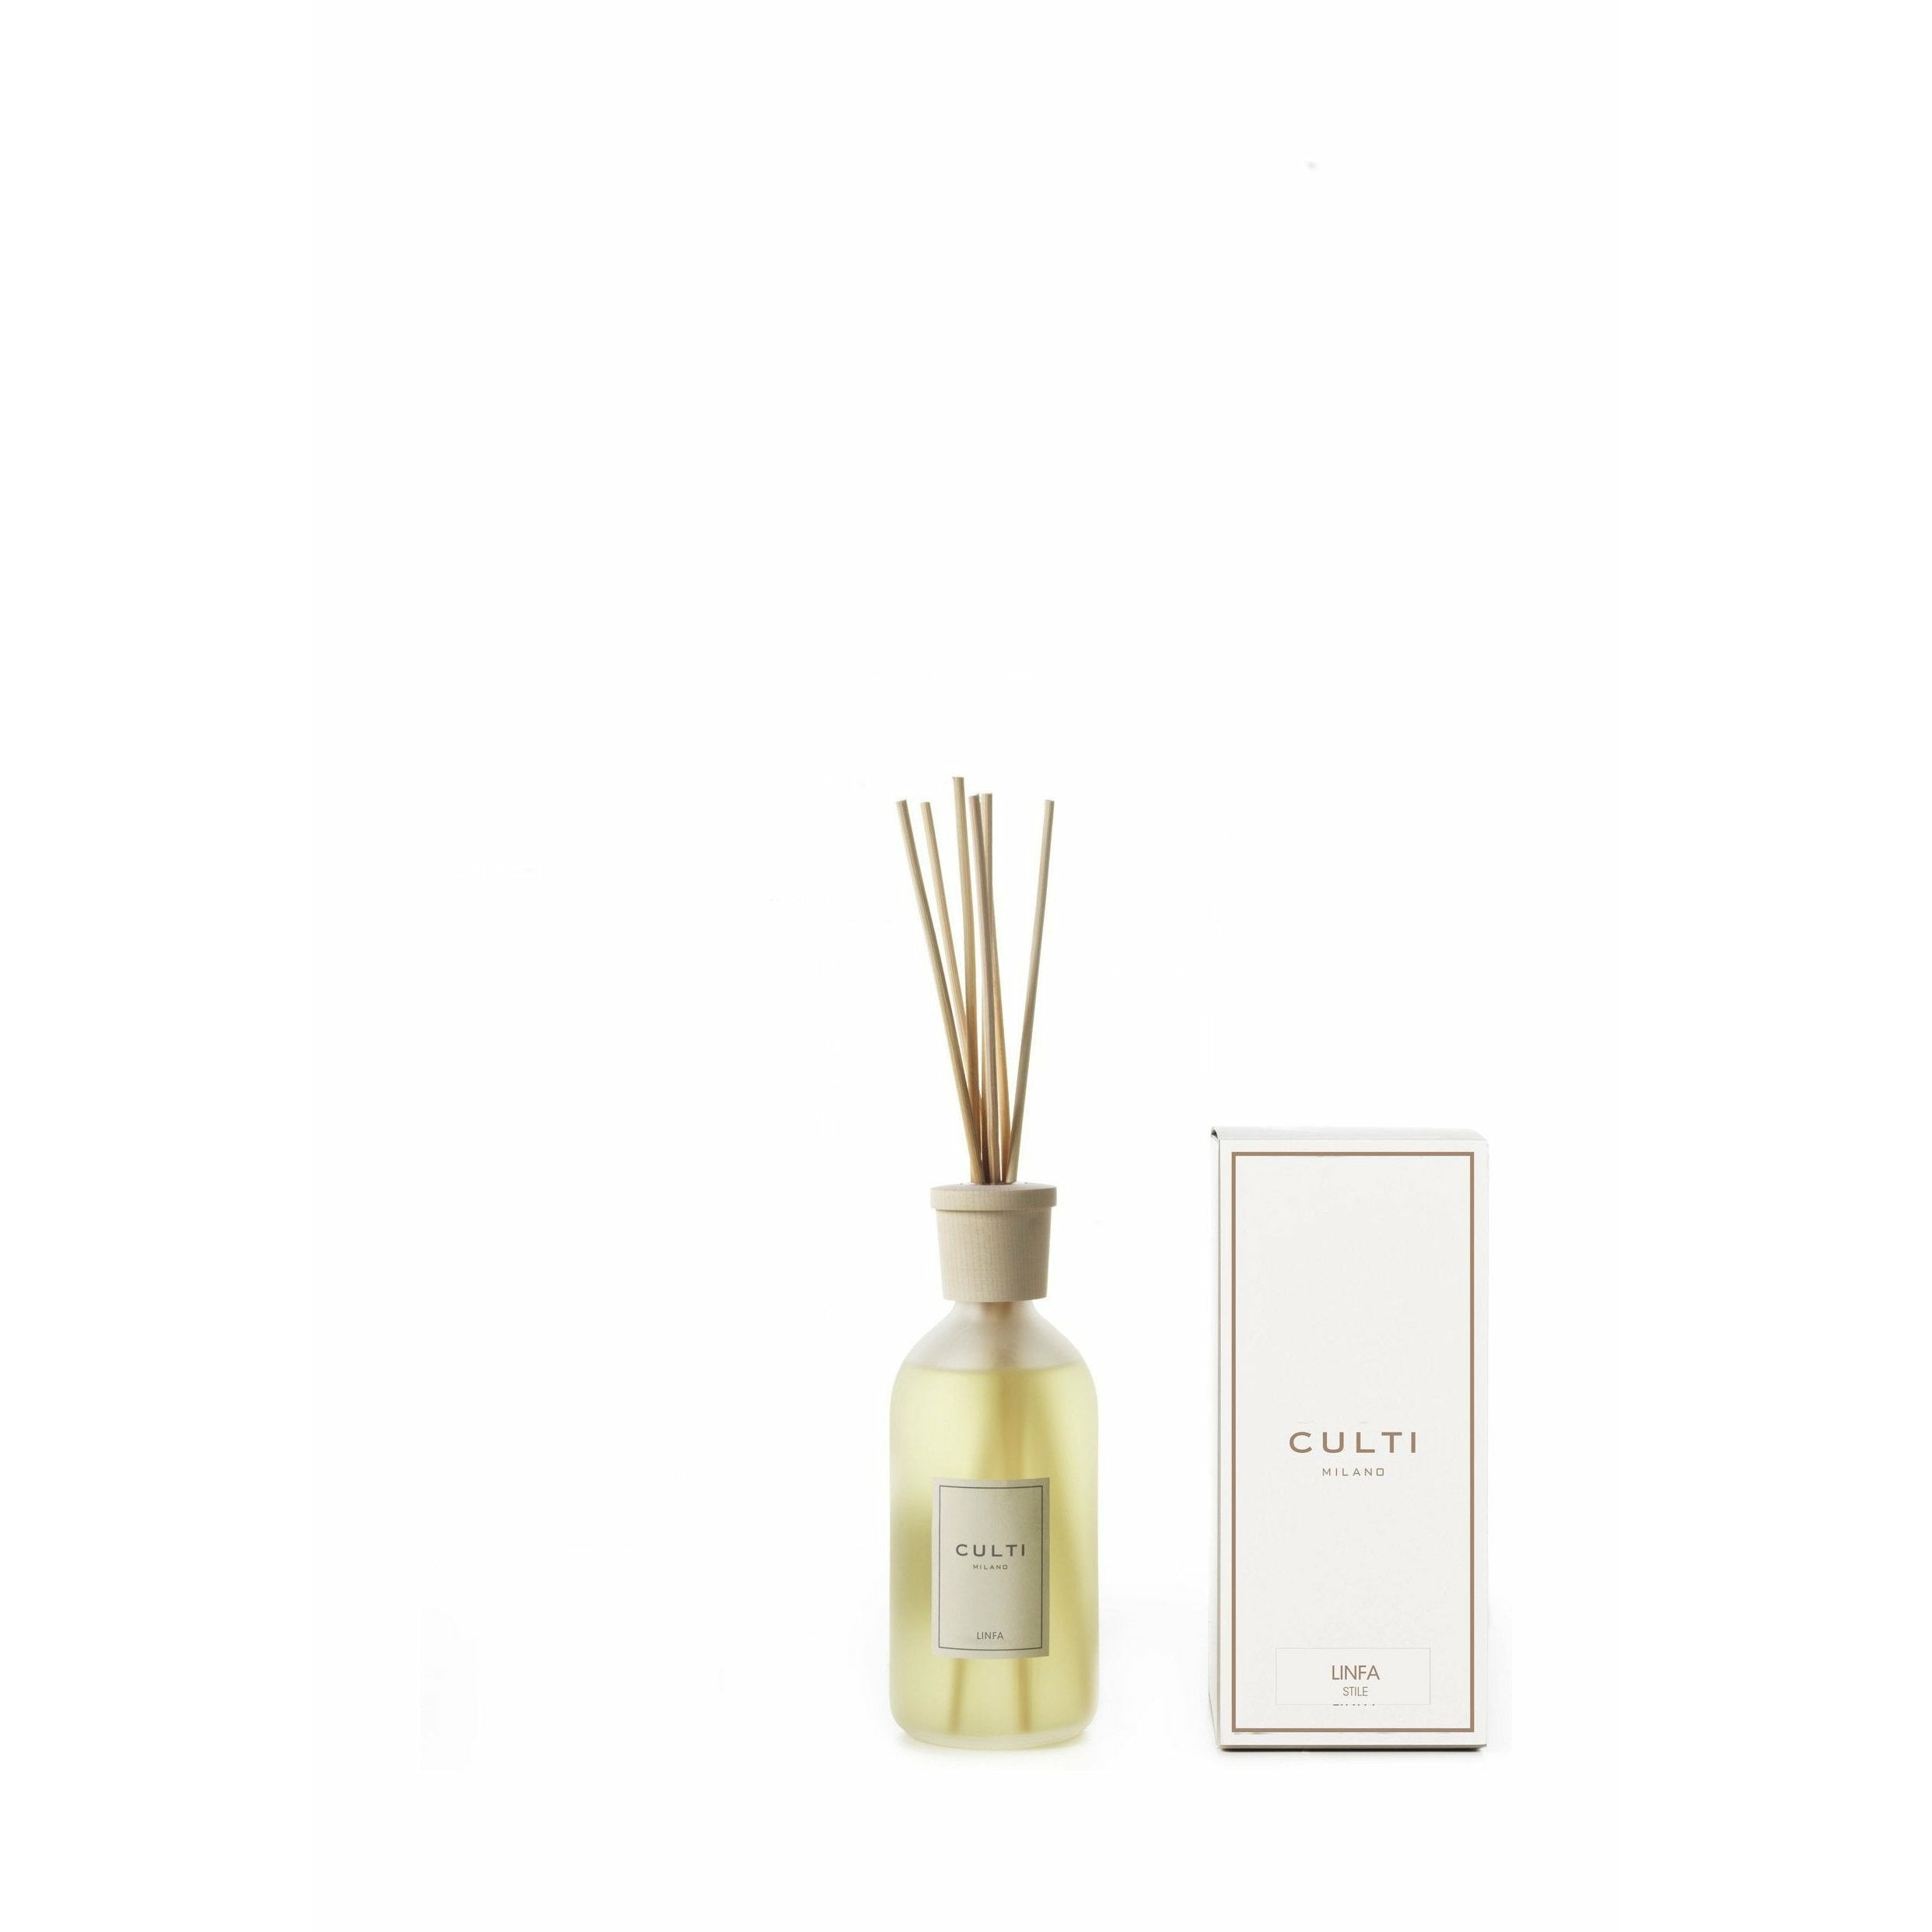 Culti Milano Stile Classic Parfüm-Diffusor Linfa, 500 ml